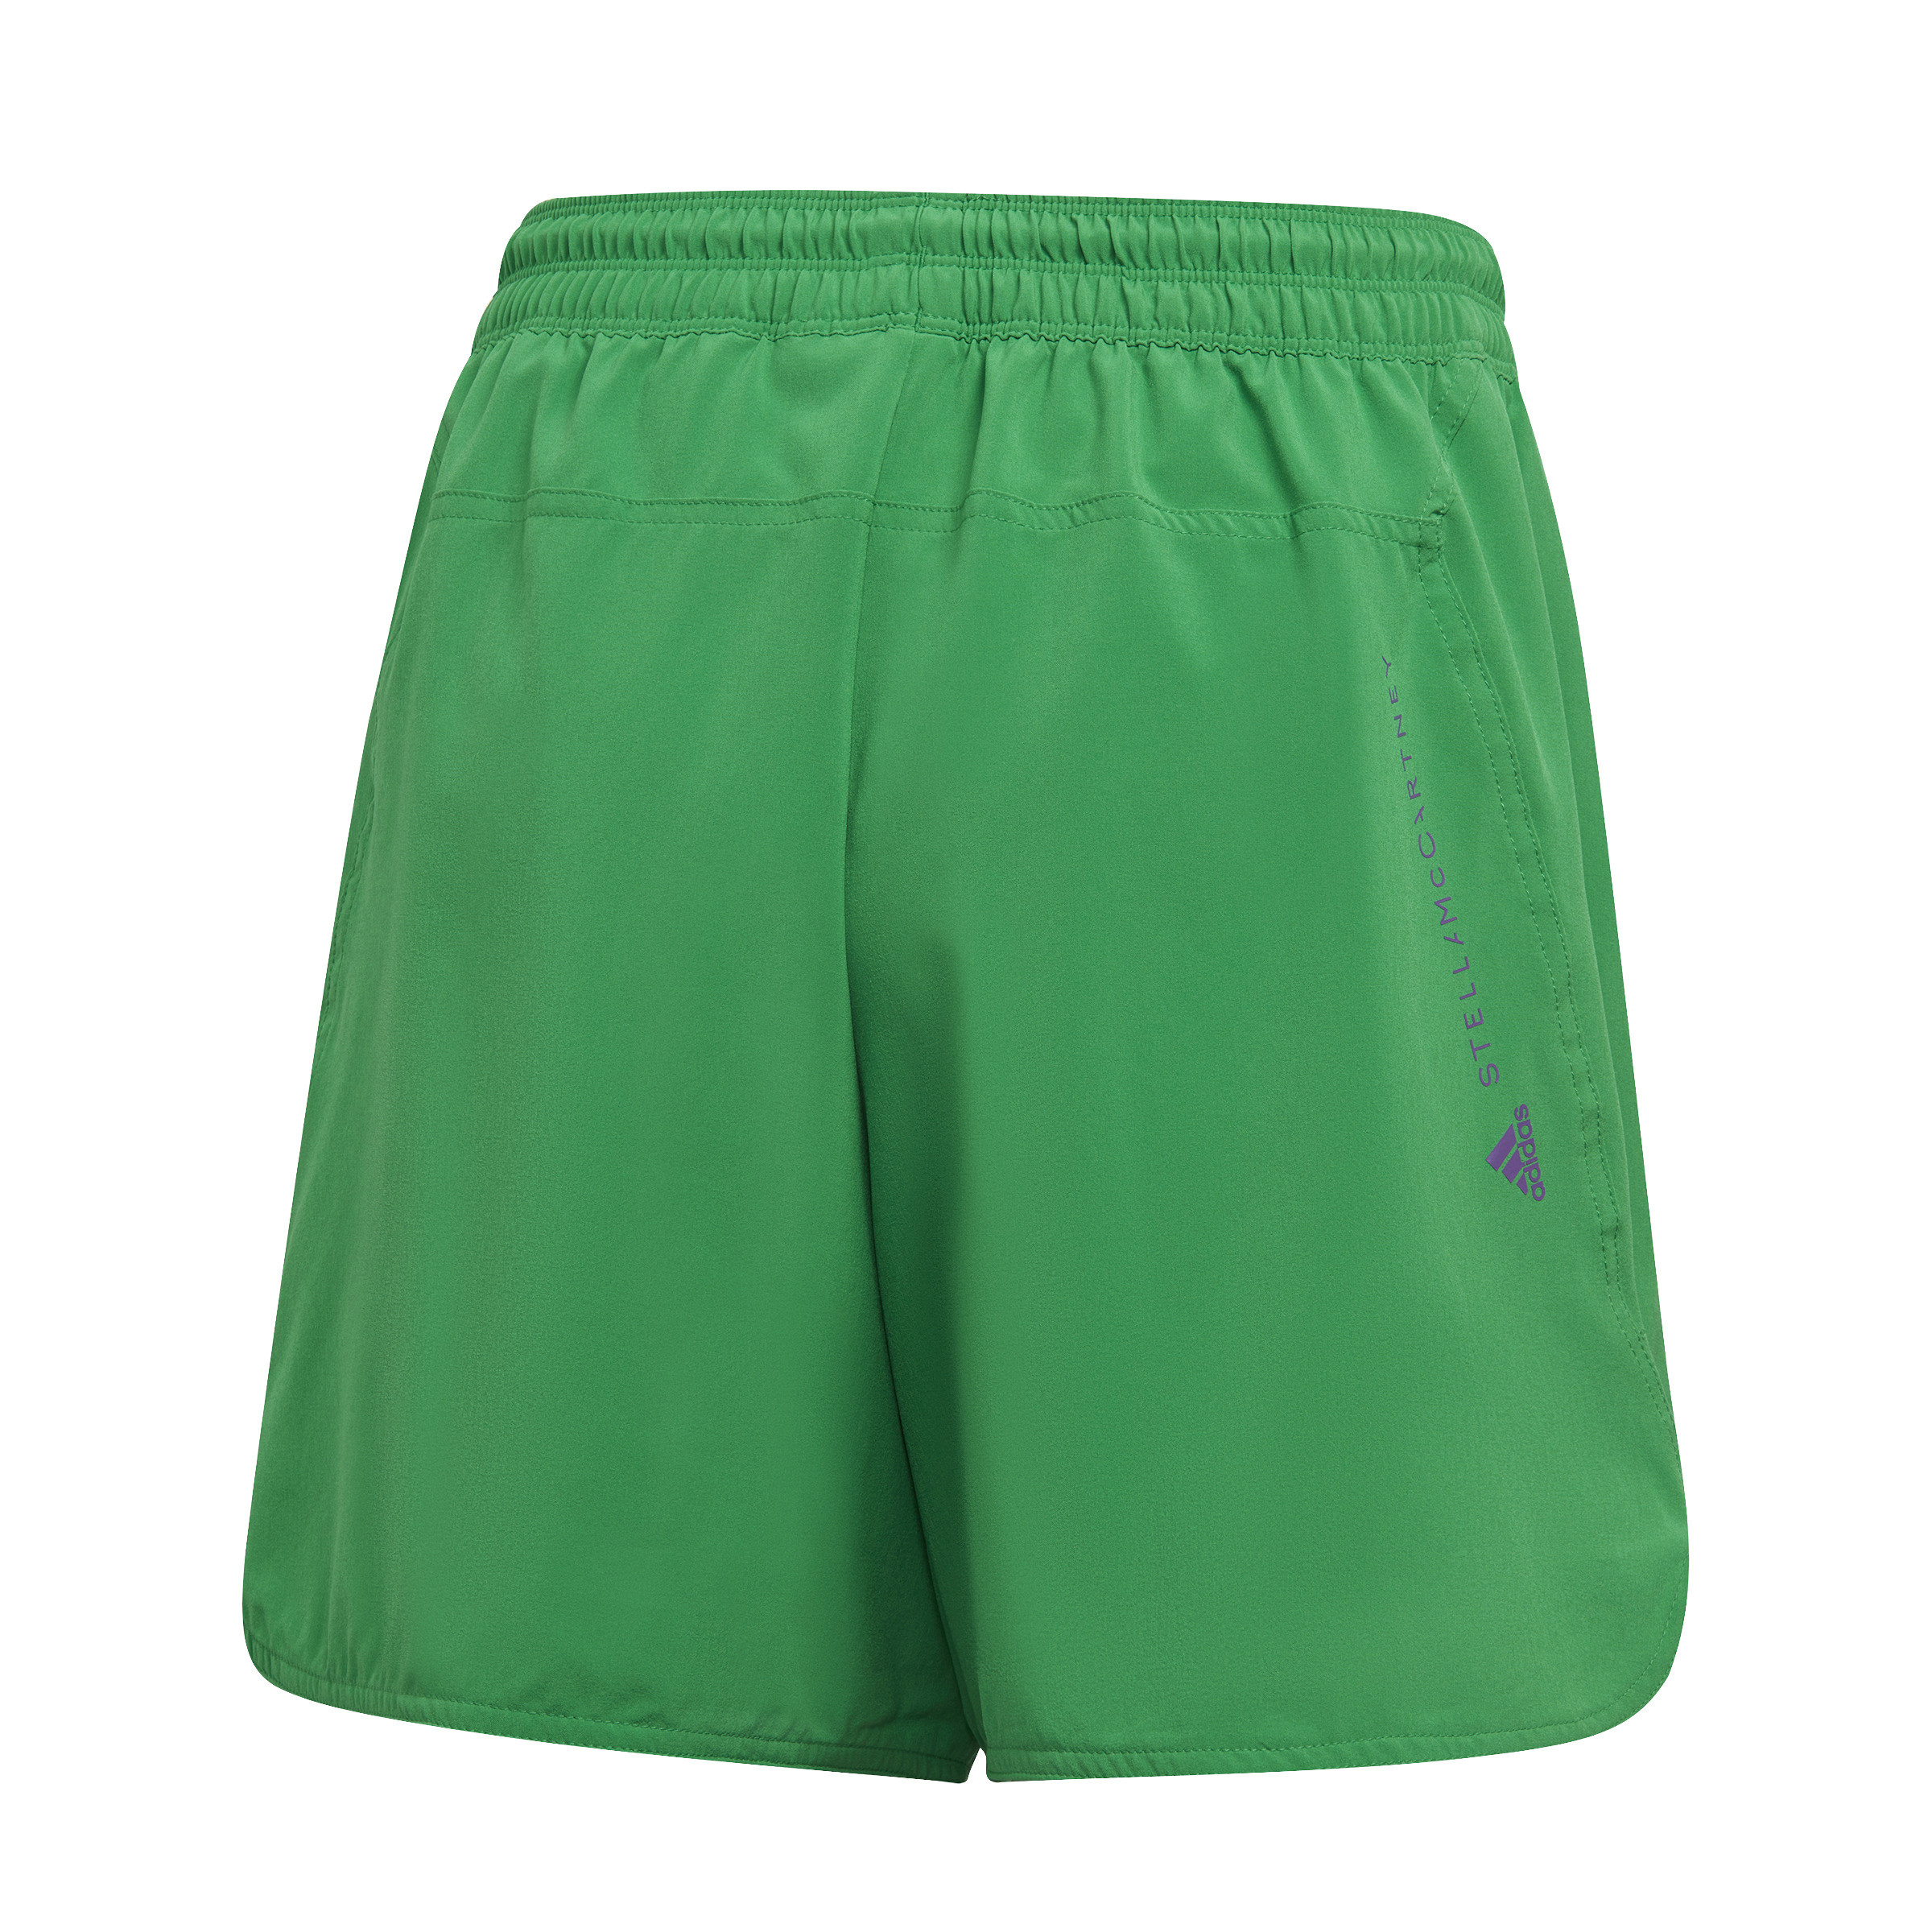 Adidas by Stella McCartney - TruePurpose training shorts, Green, large image number 1